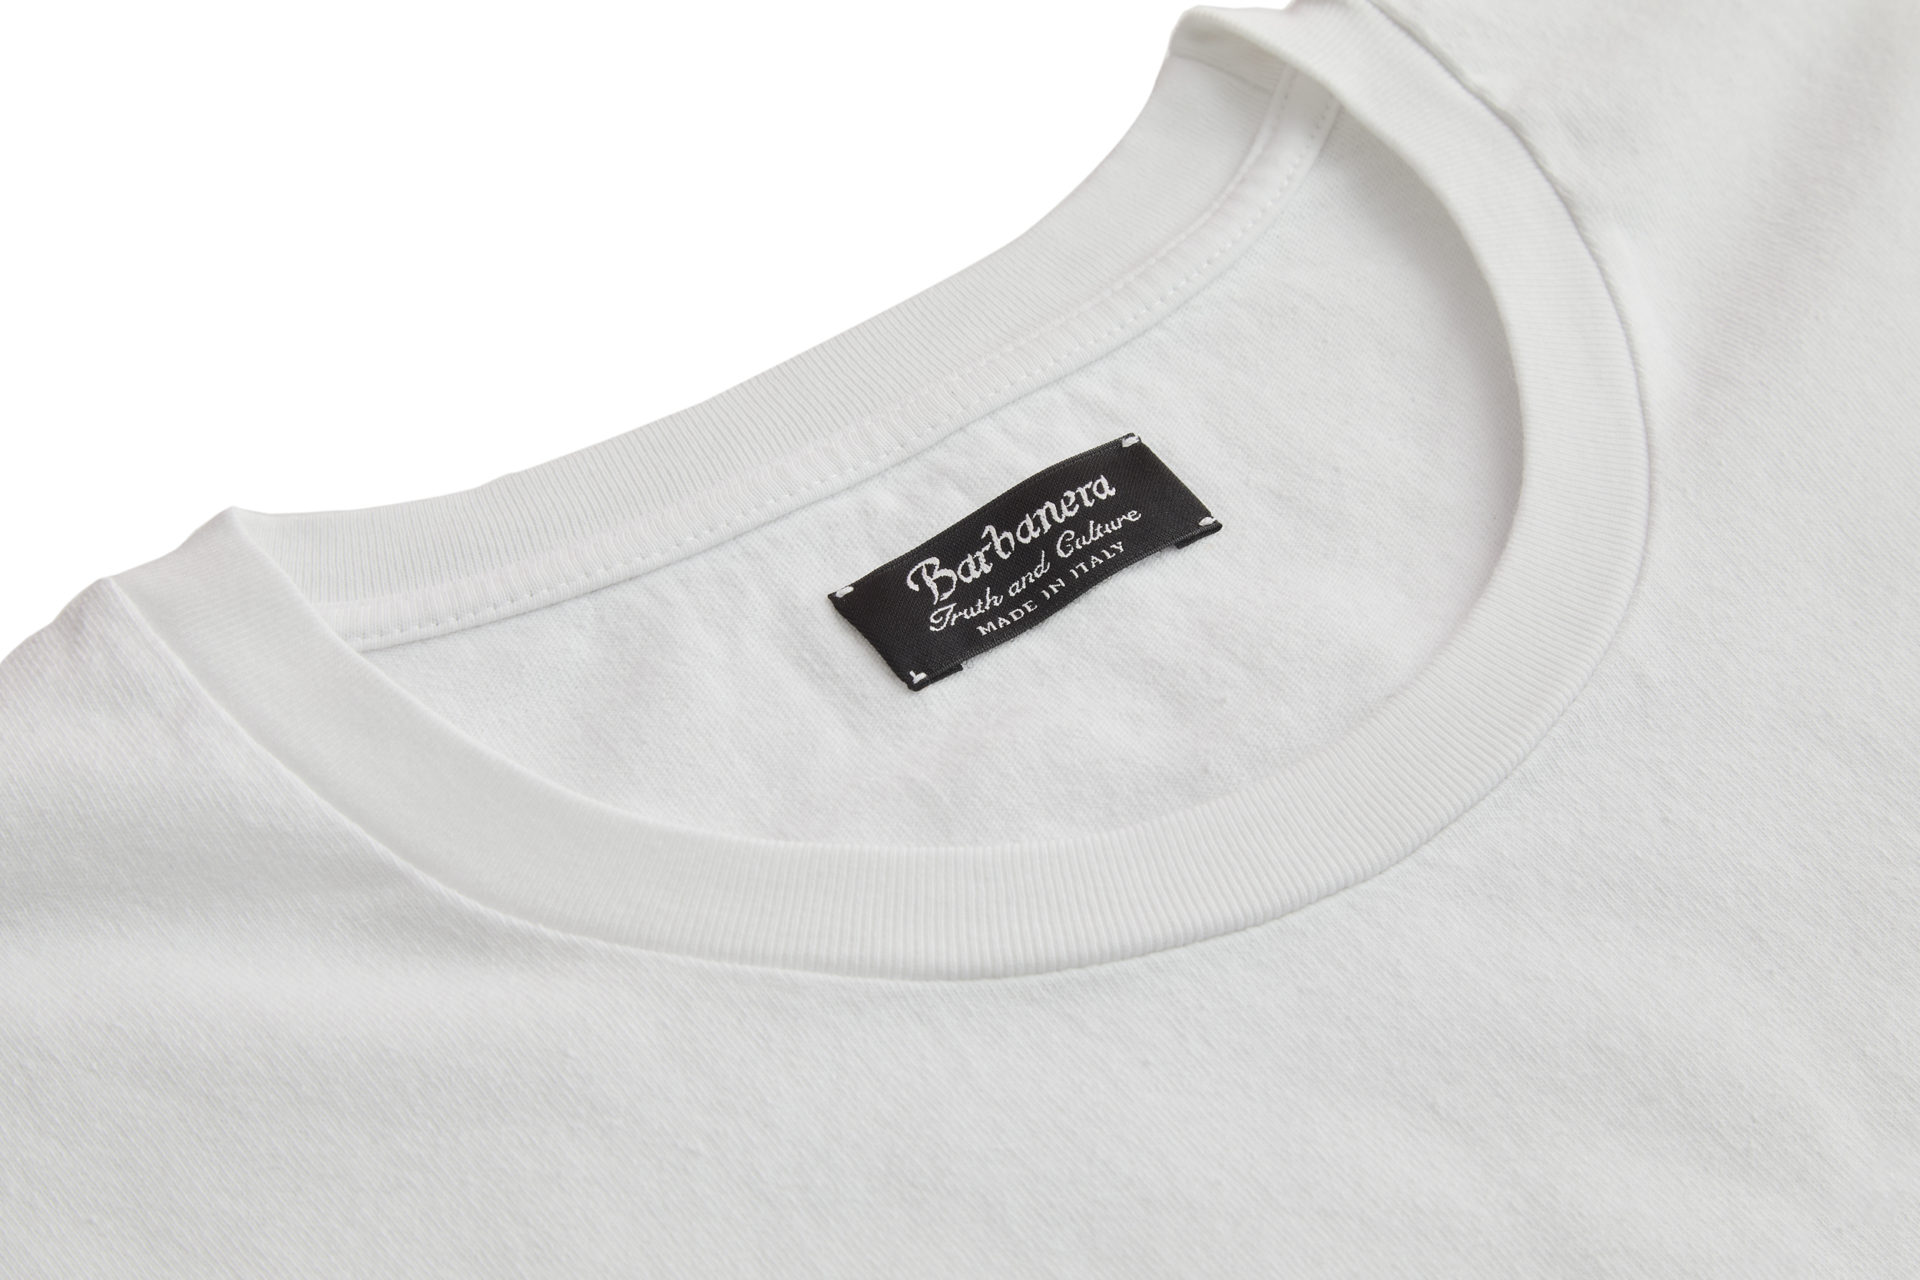 Plain Black Raw Cotton T-Shirt - Barbanera